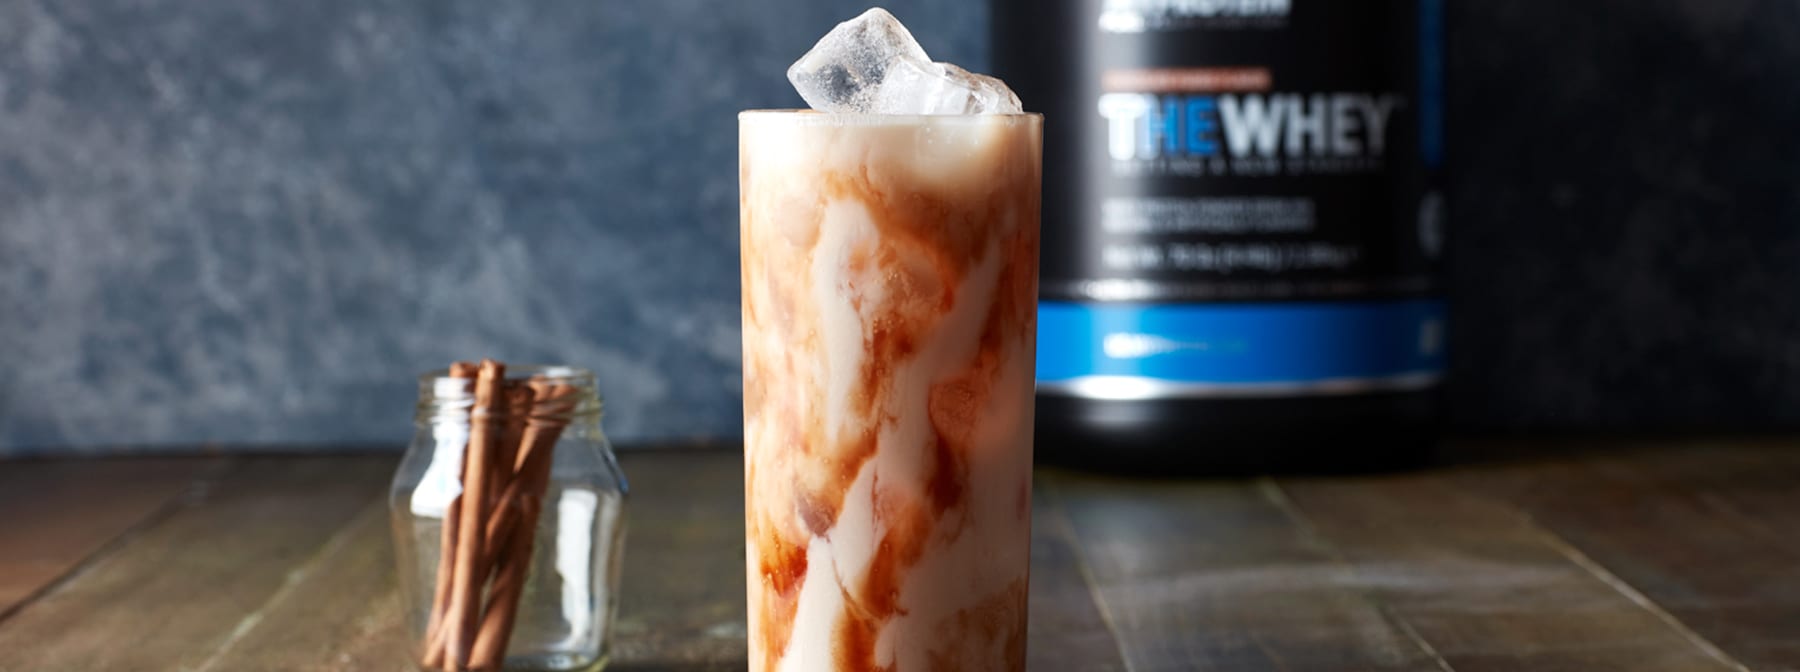 TheWhey protein shake | Vanilla creme